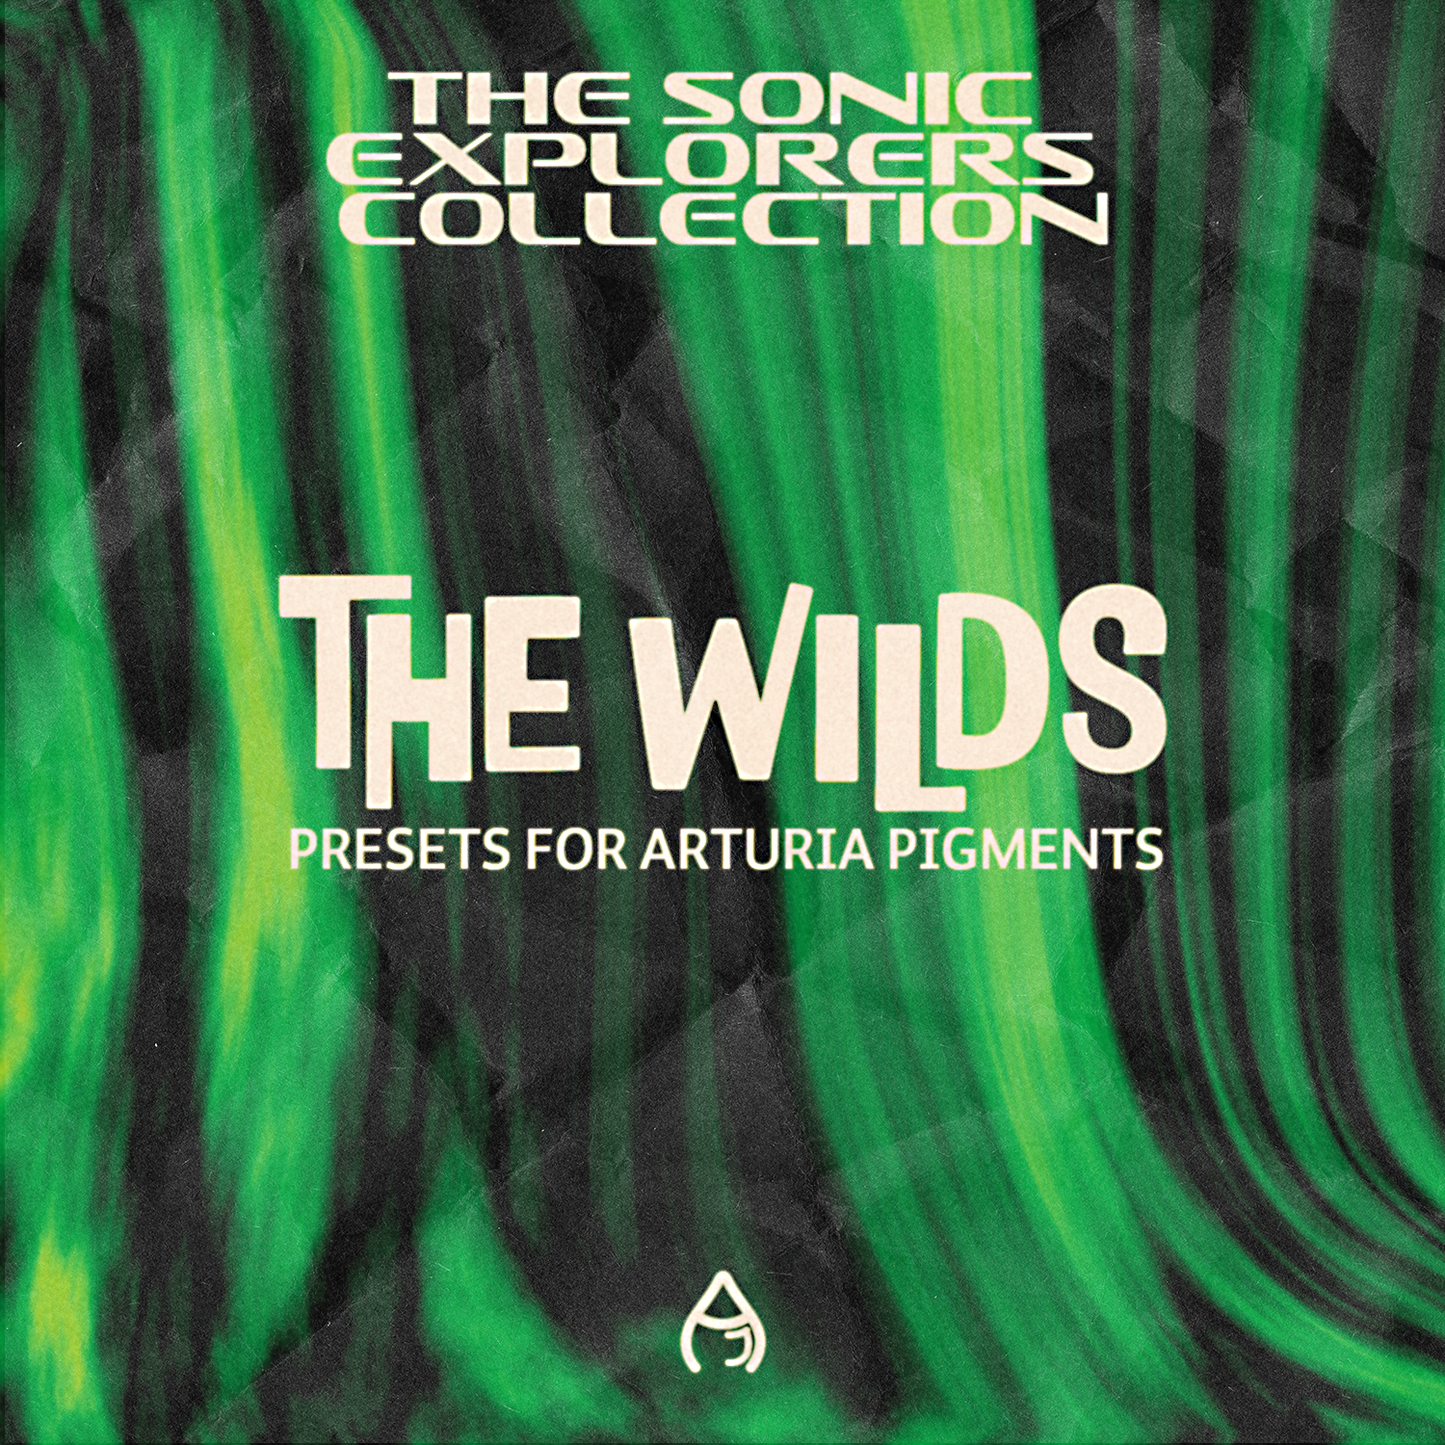 The Sonic Explorers Collection (Arturia Presets)